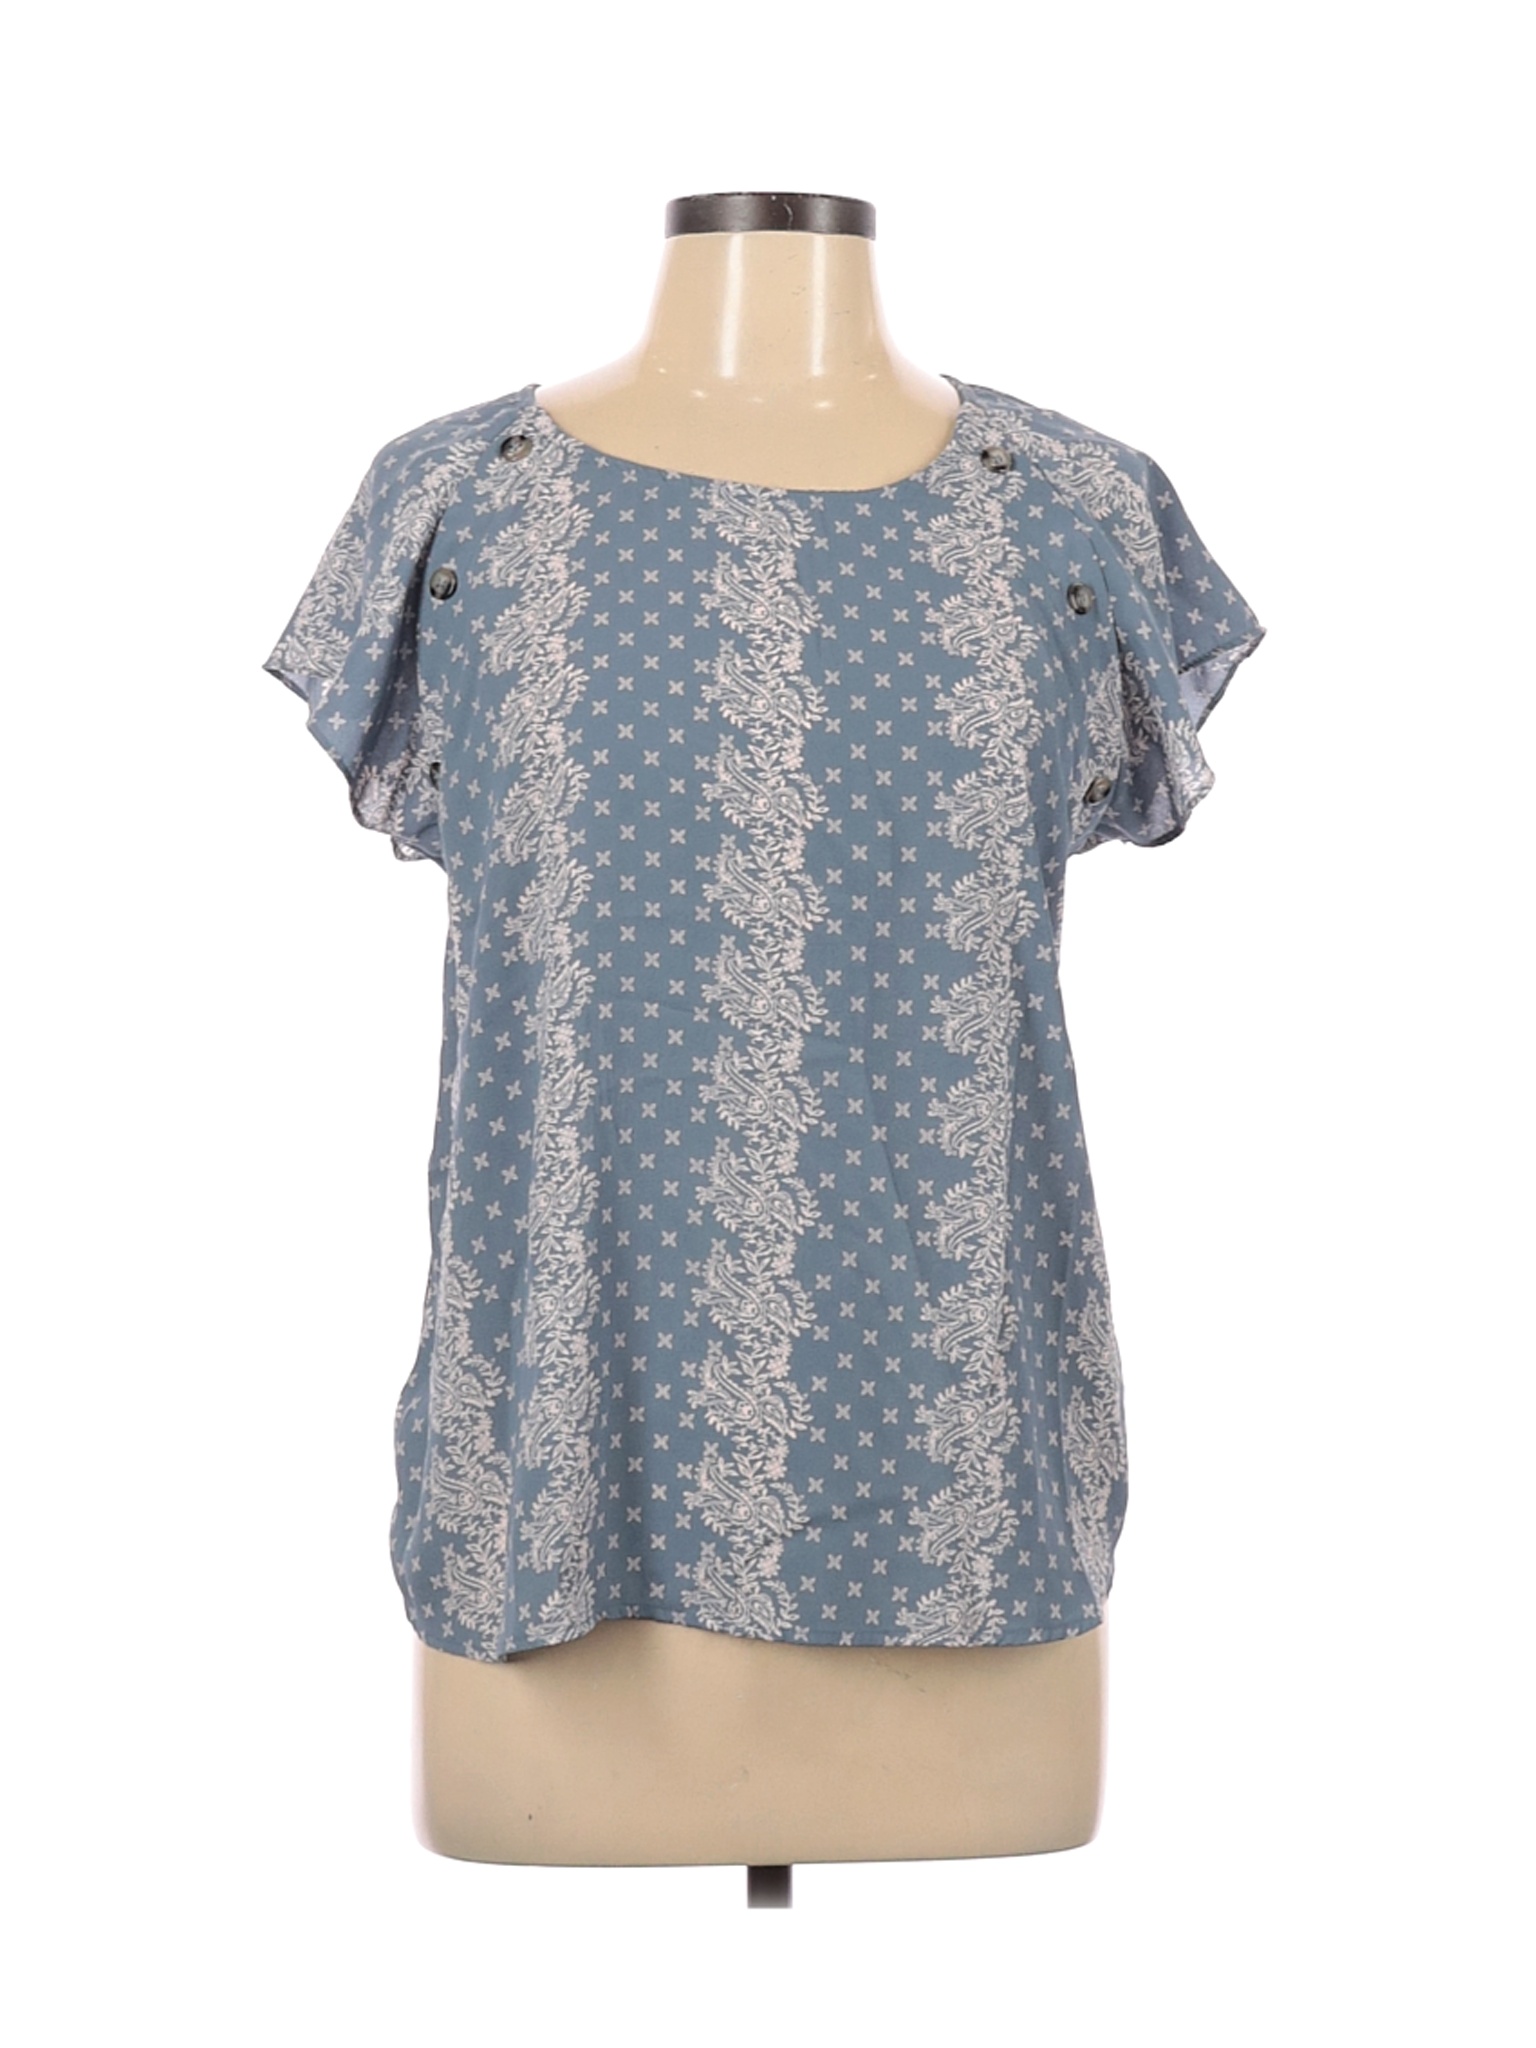 Maurices Women Blue Short Sleeve Top L | eBay